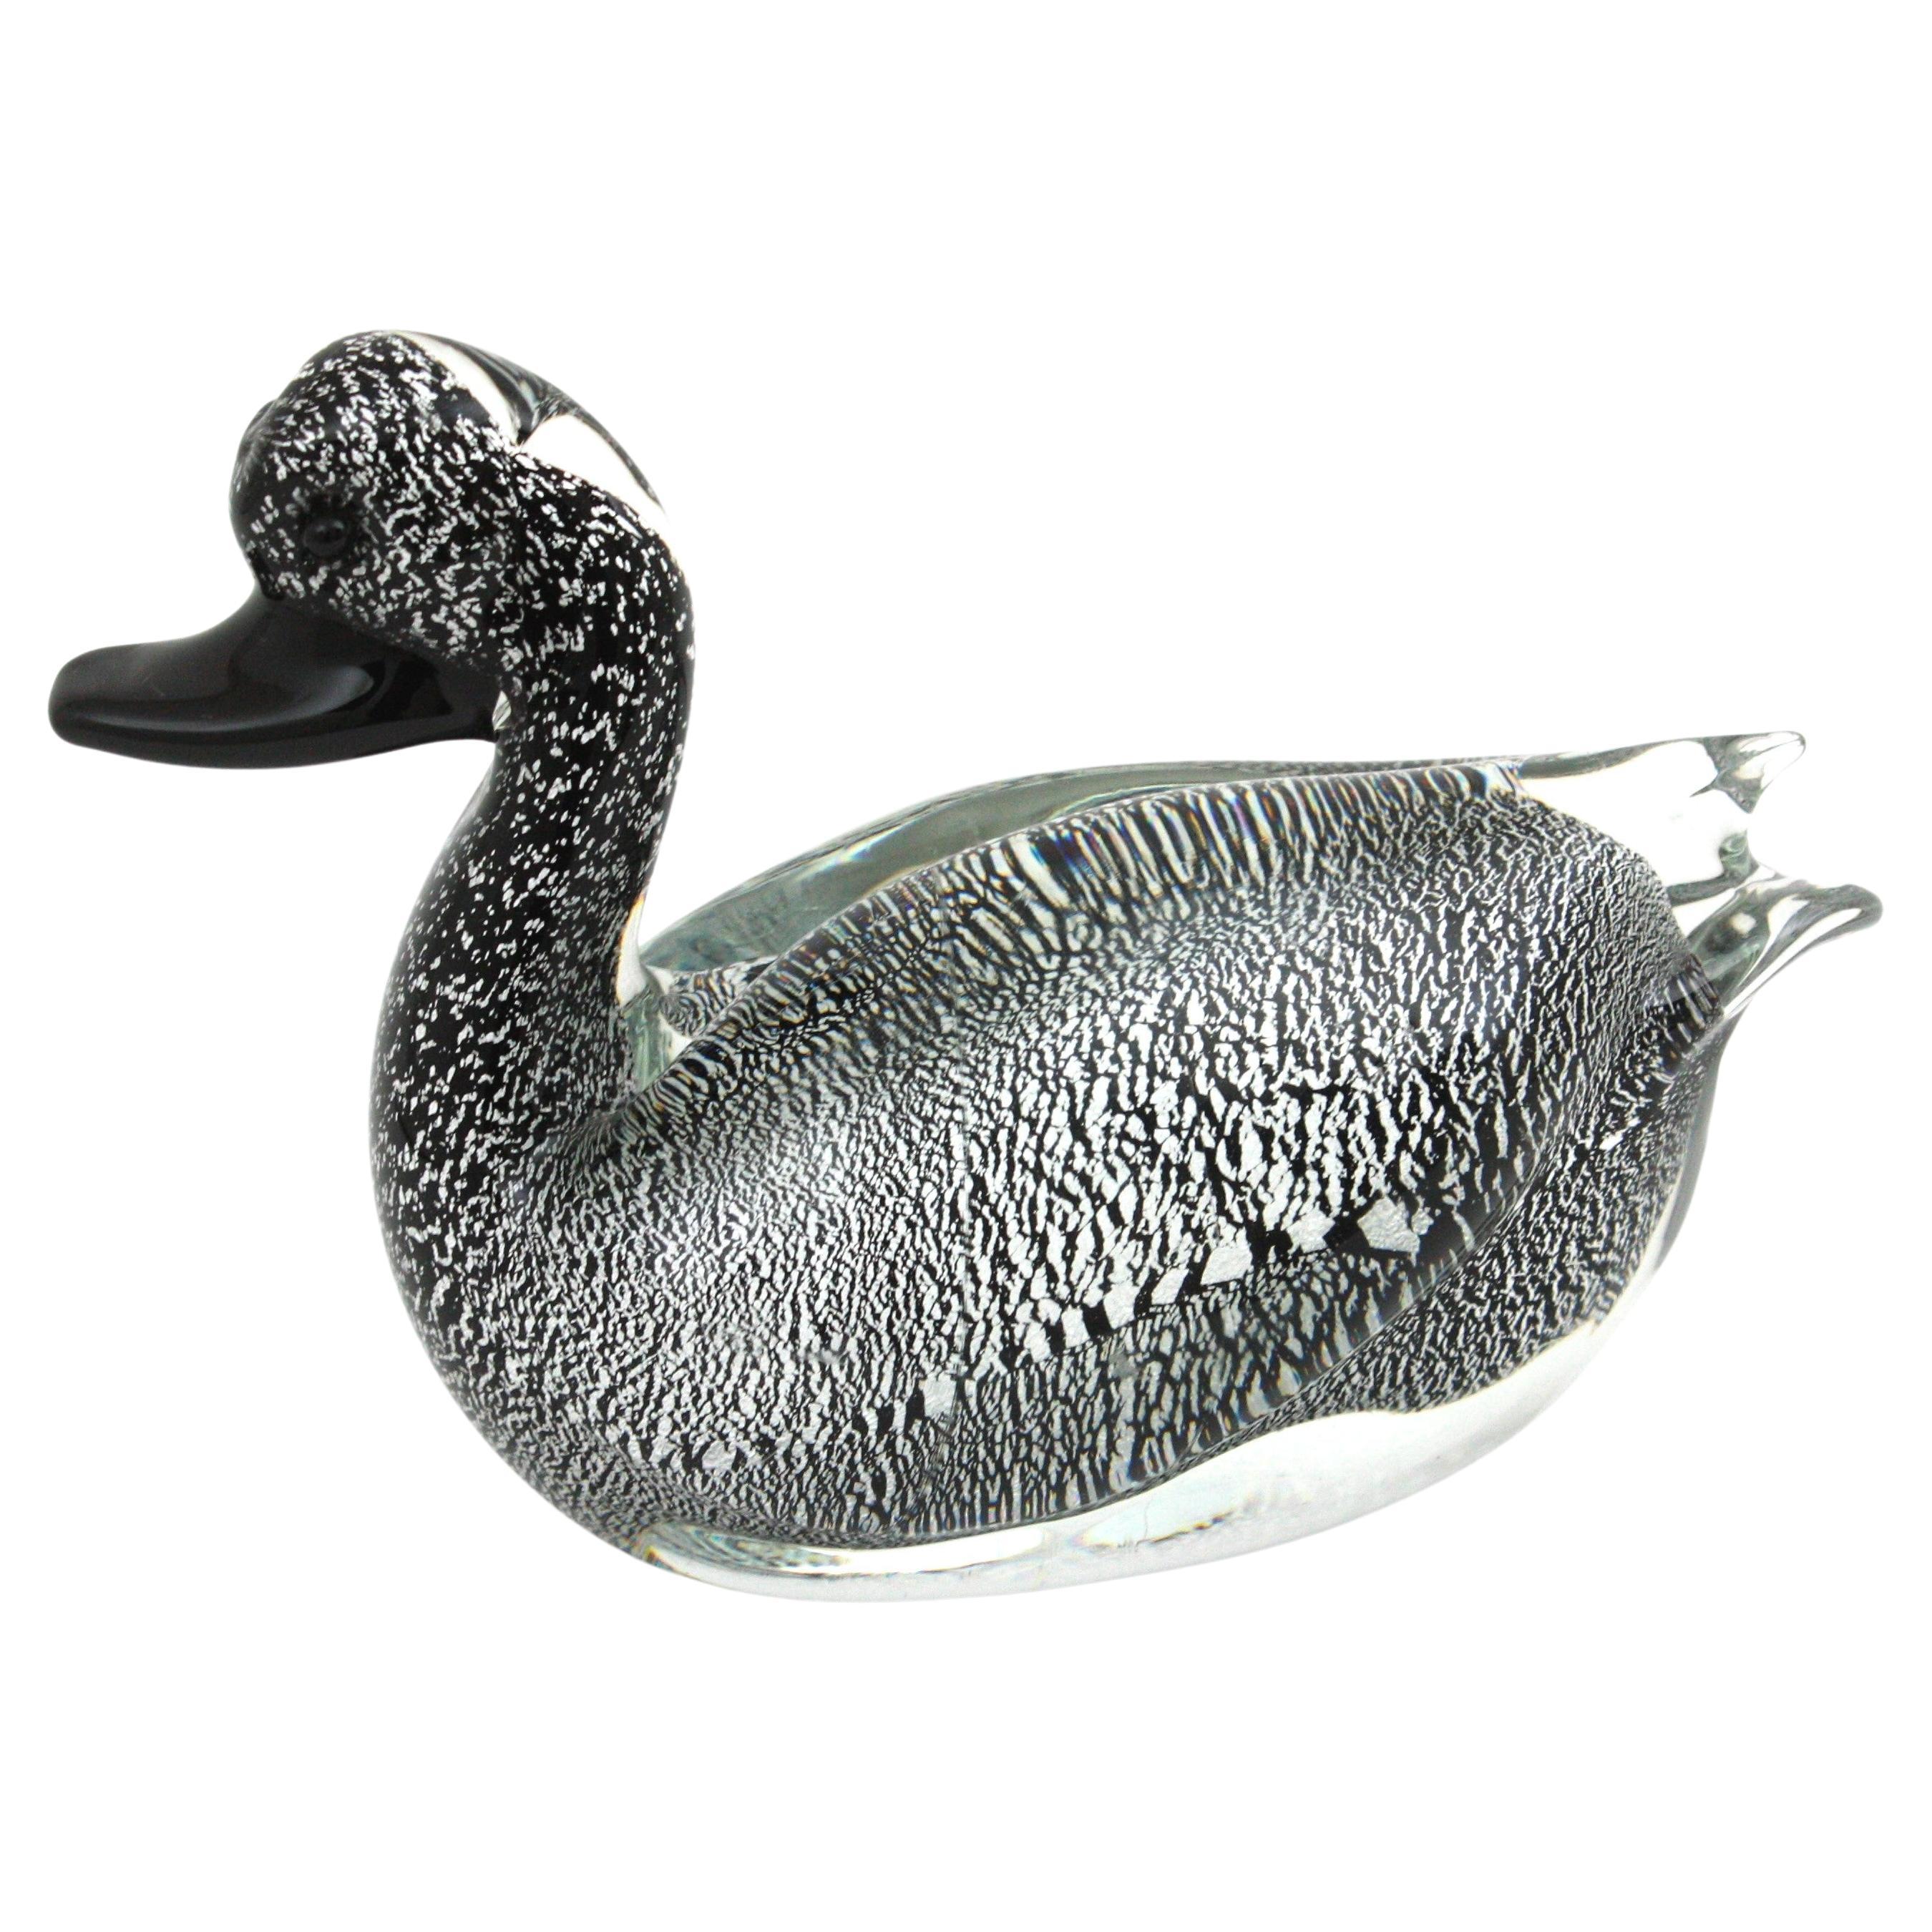  Murano Black Clear Duck Sculpture Art Glass Paperweight with Silver Flecks